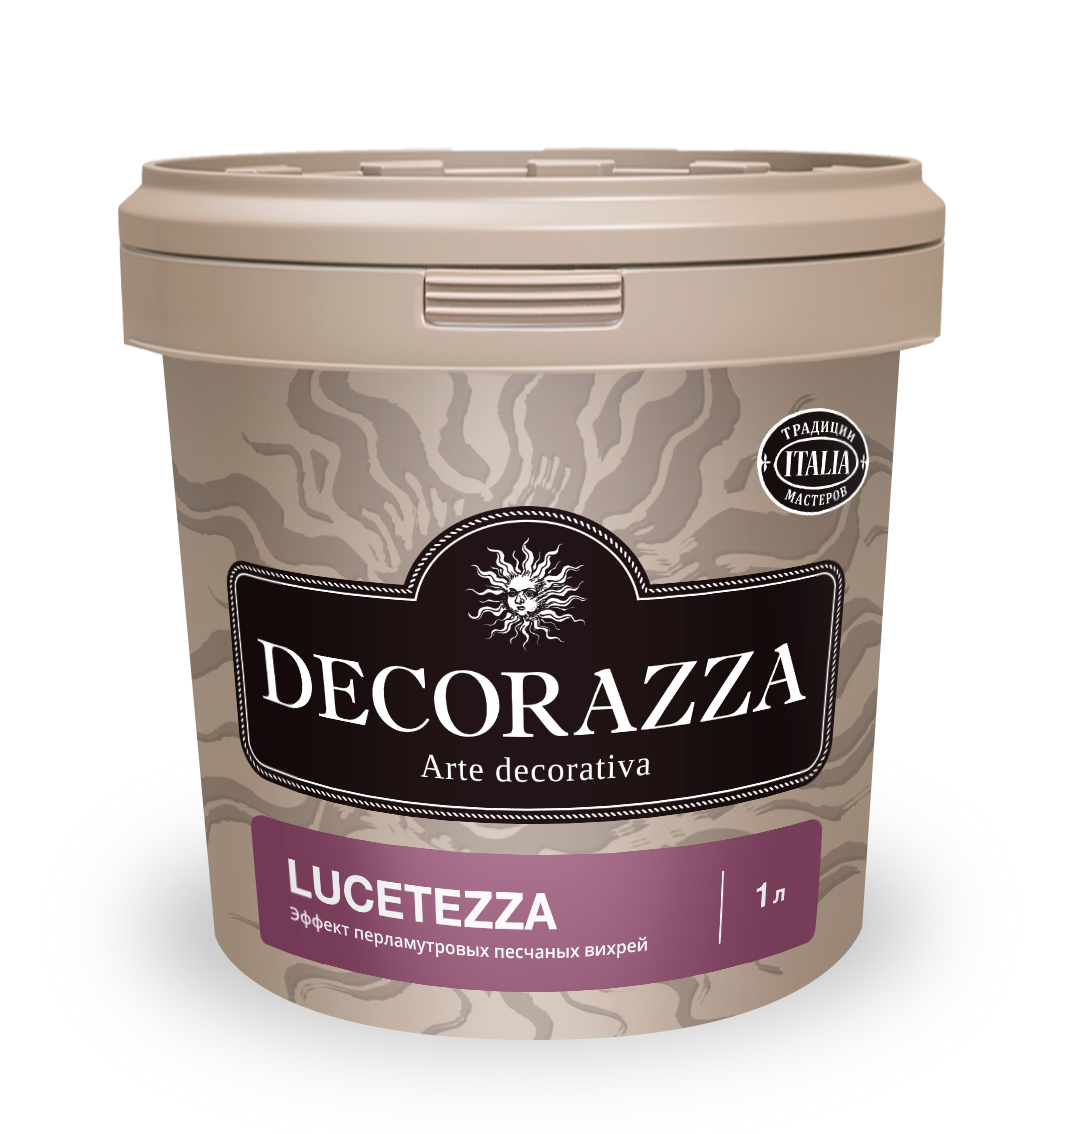 Декоративная штукатурка Decorazza Lucetezza Alluminio LC 700, 1 л декоративная штукатурка decorazza velluto vt 001 1 кг